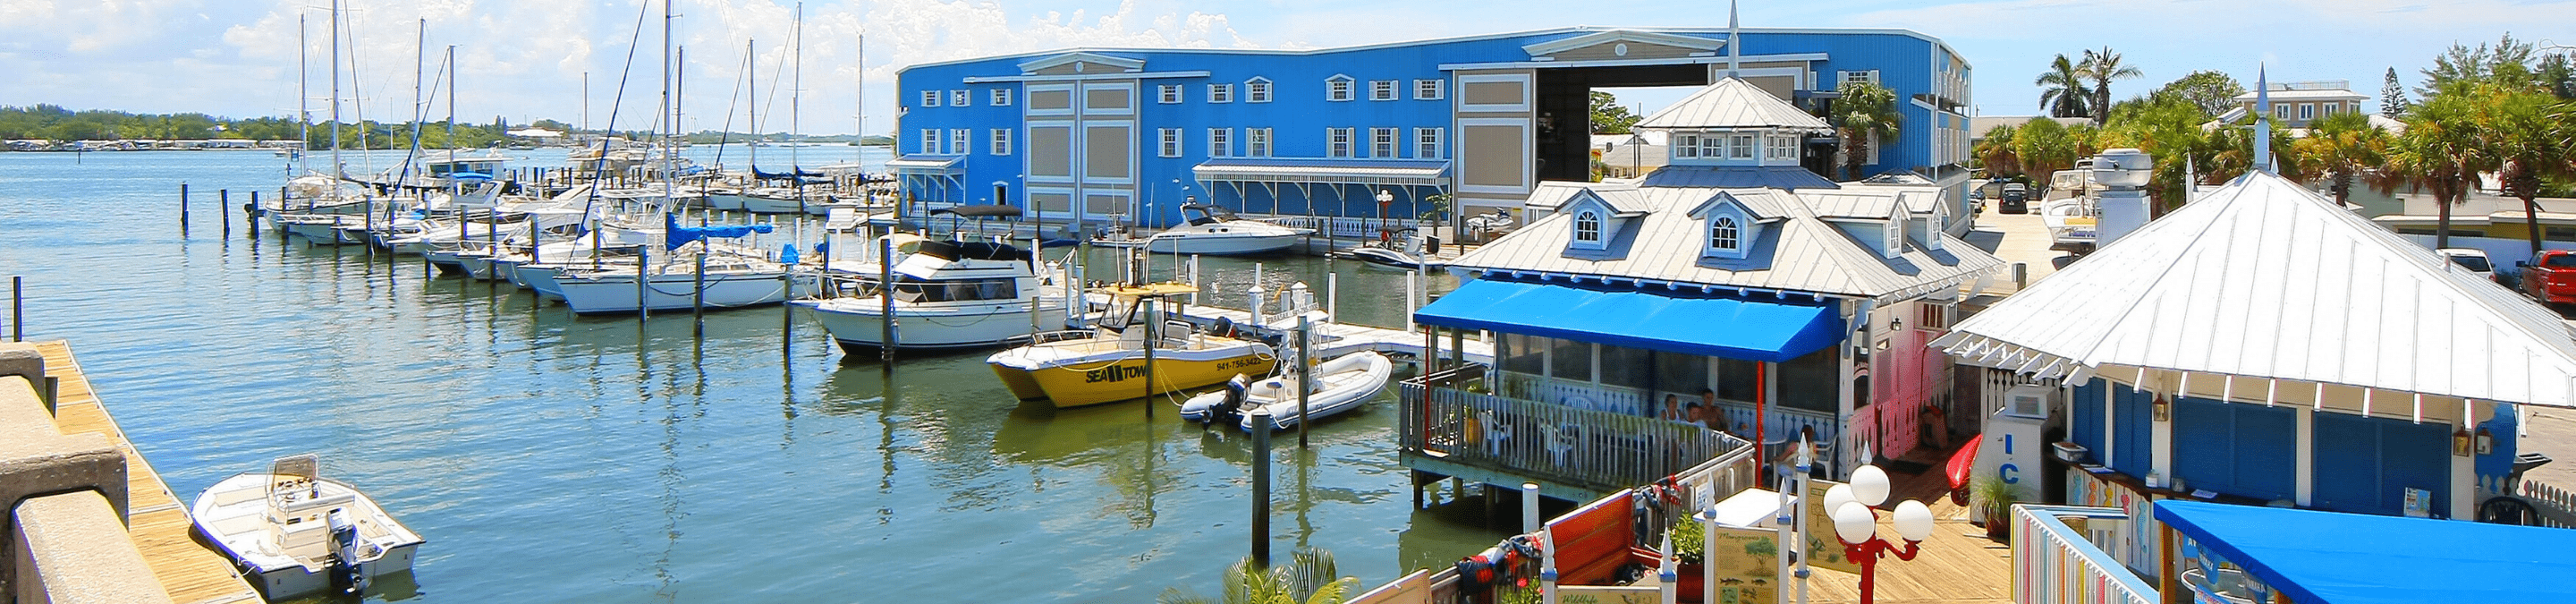 Marina on Anna Maria Island, Boats and buildings.